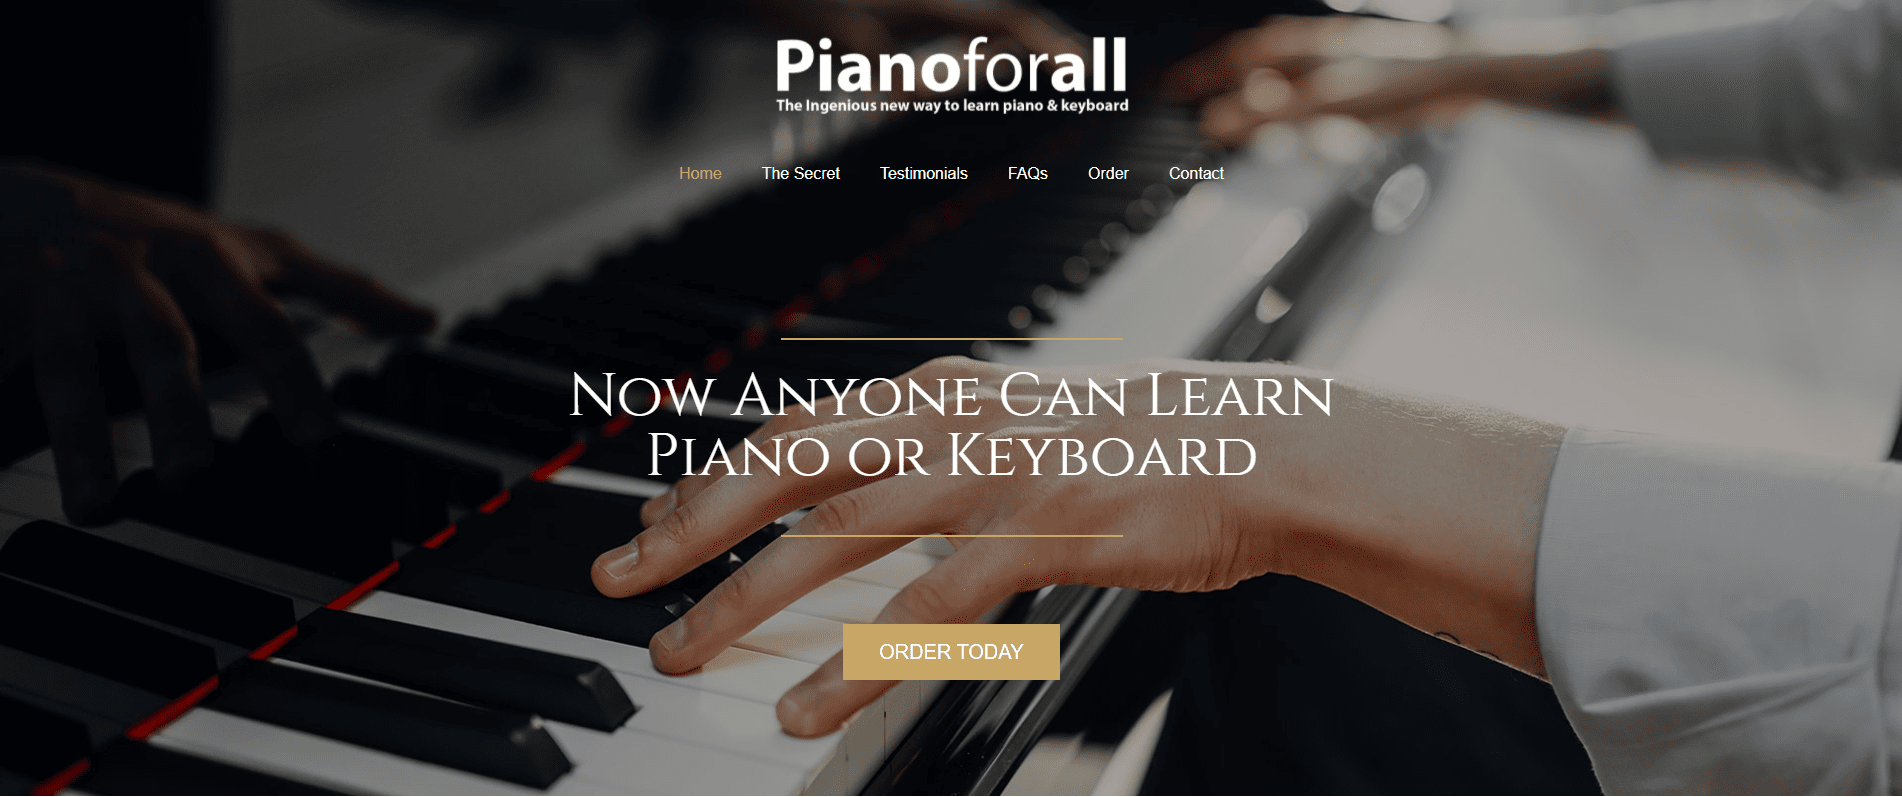 Pianoforall